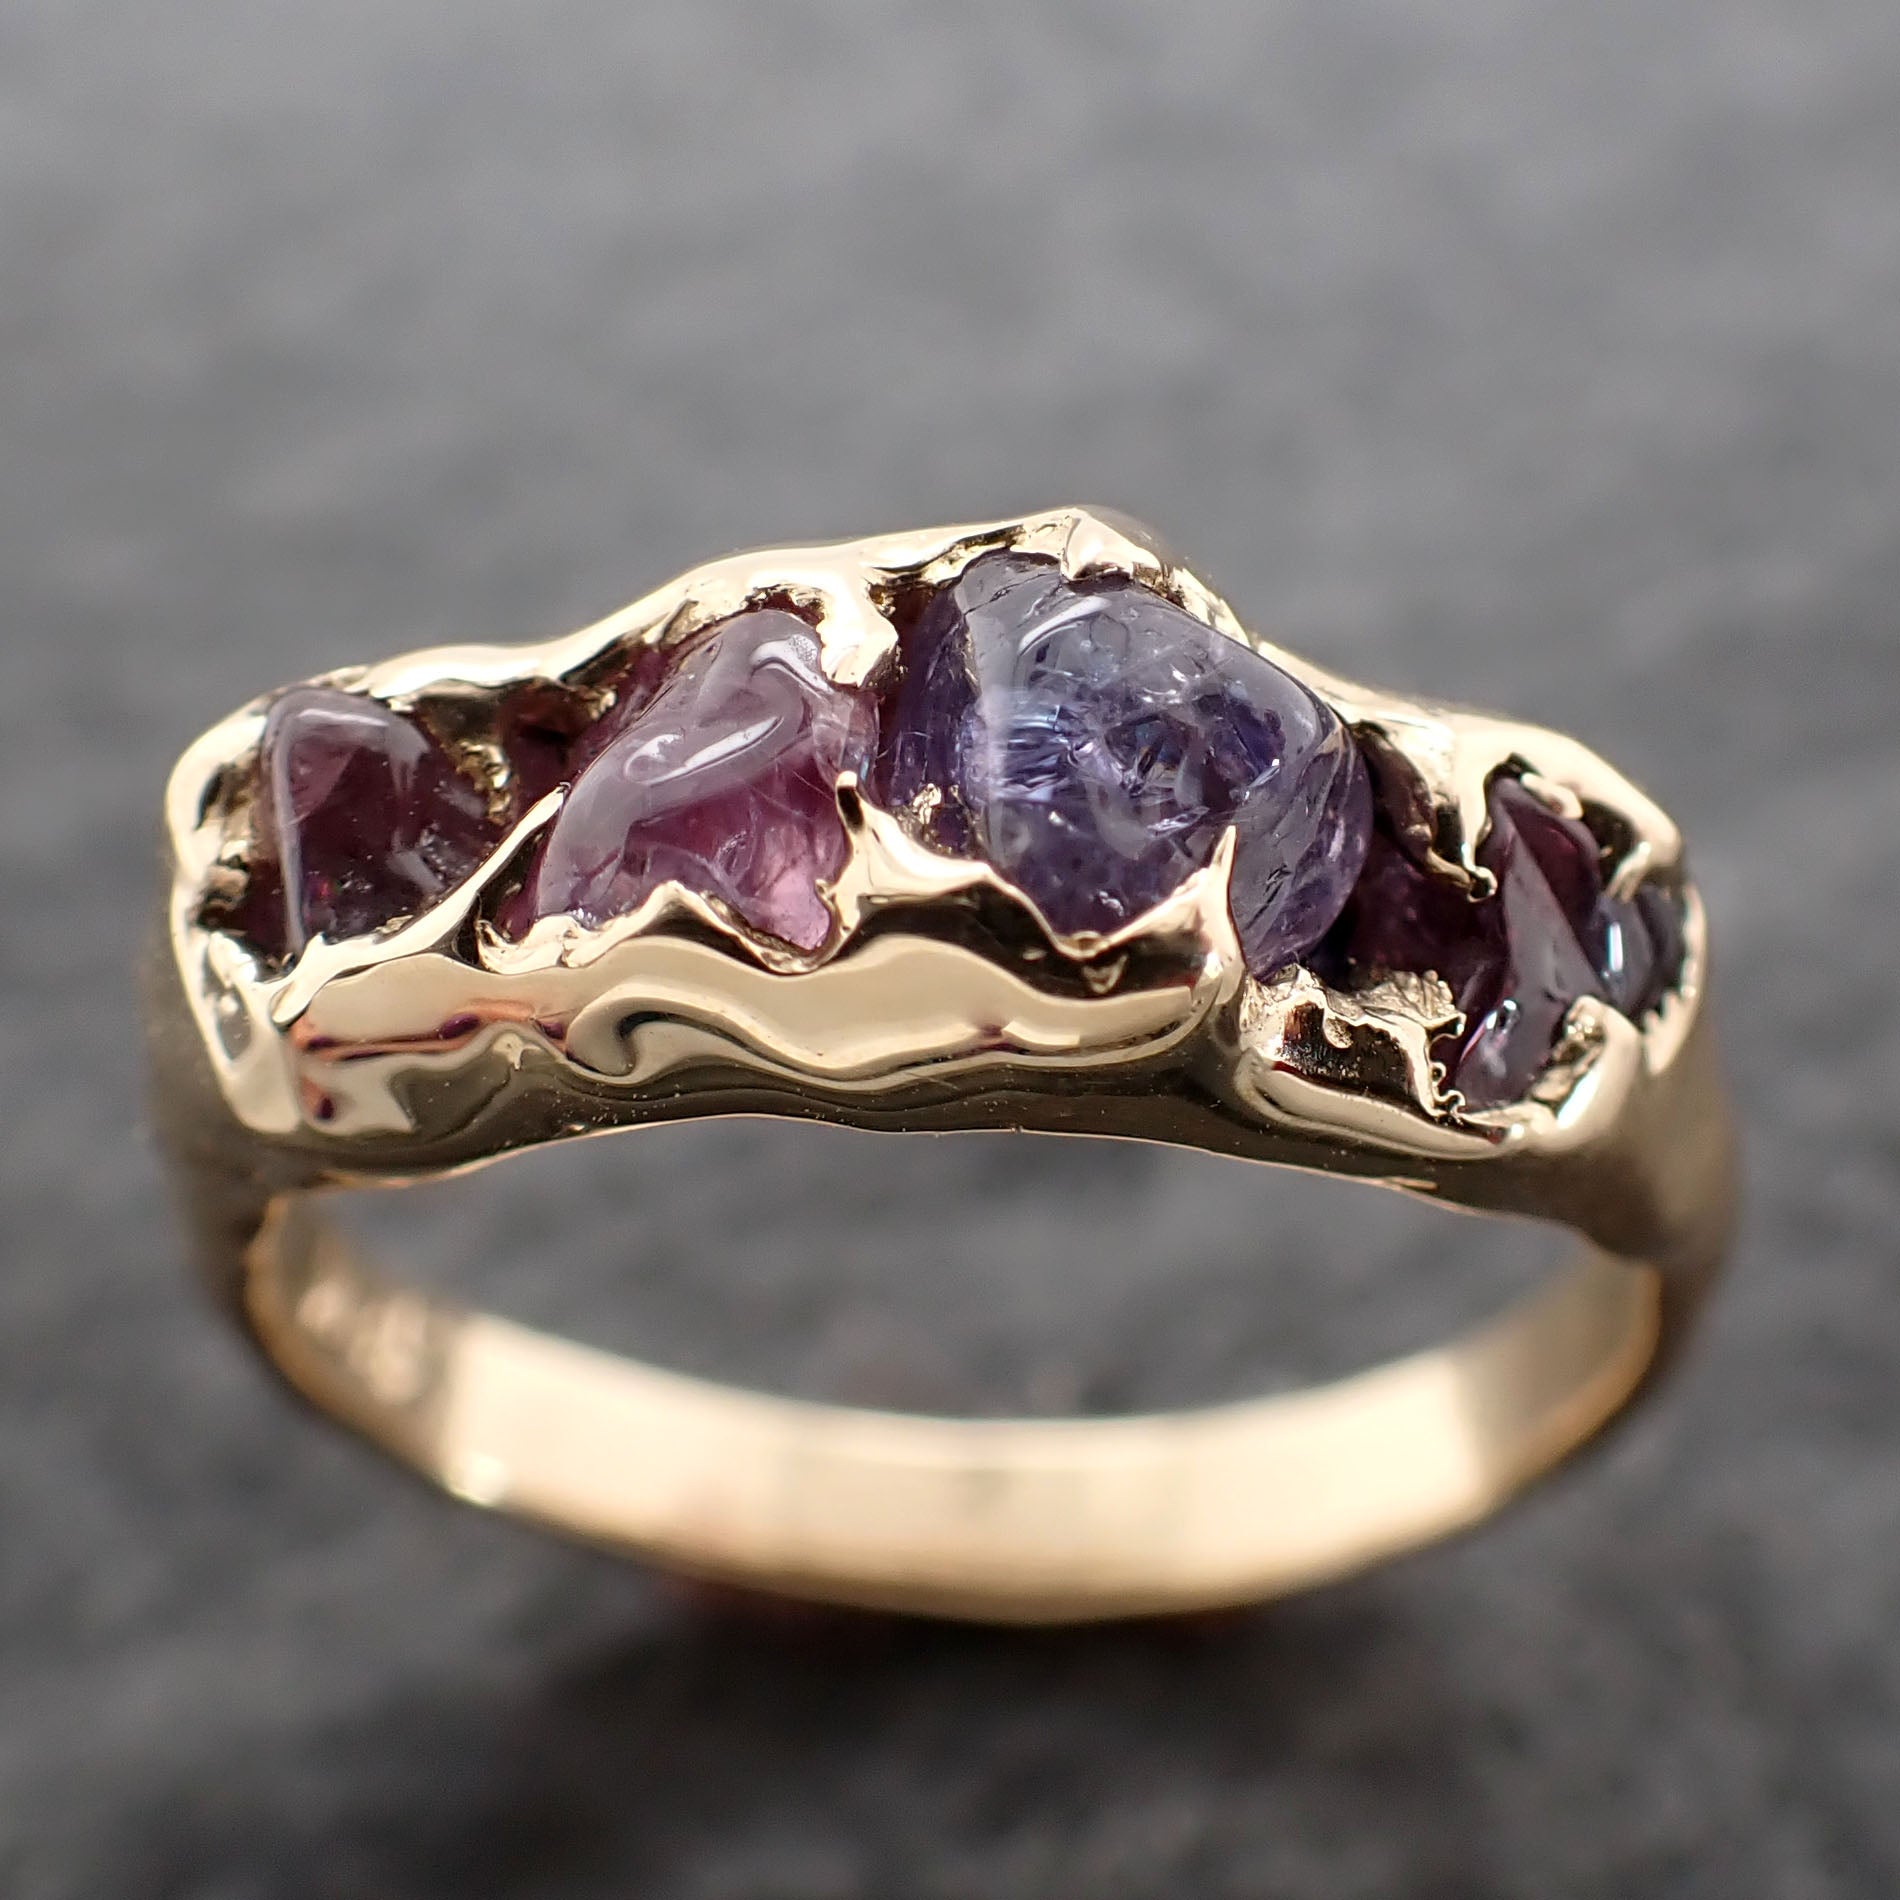 Sapphire tumbled purple lavender violet tumbled yellow 18k gold gemstone band 2657